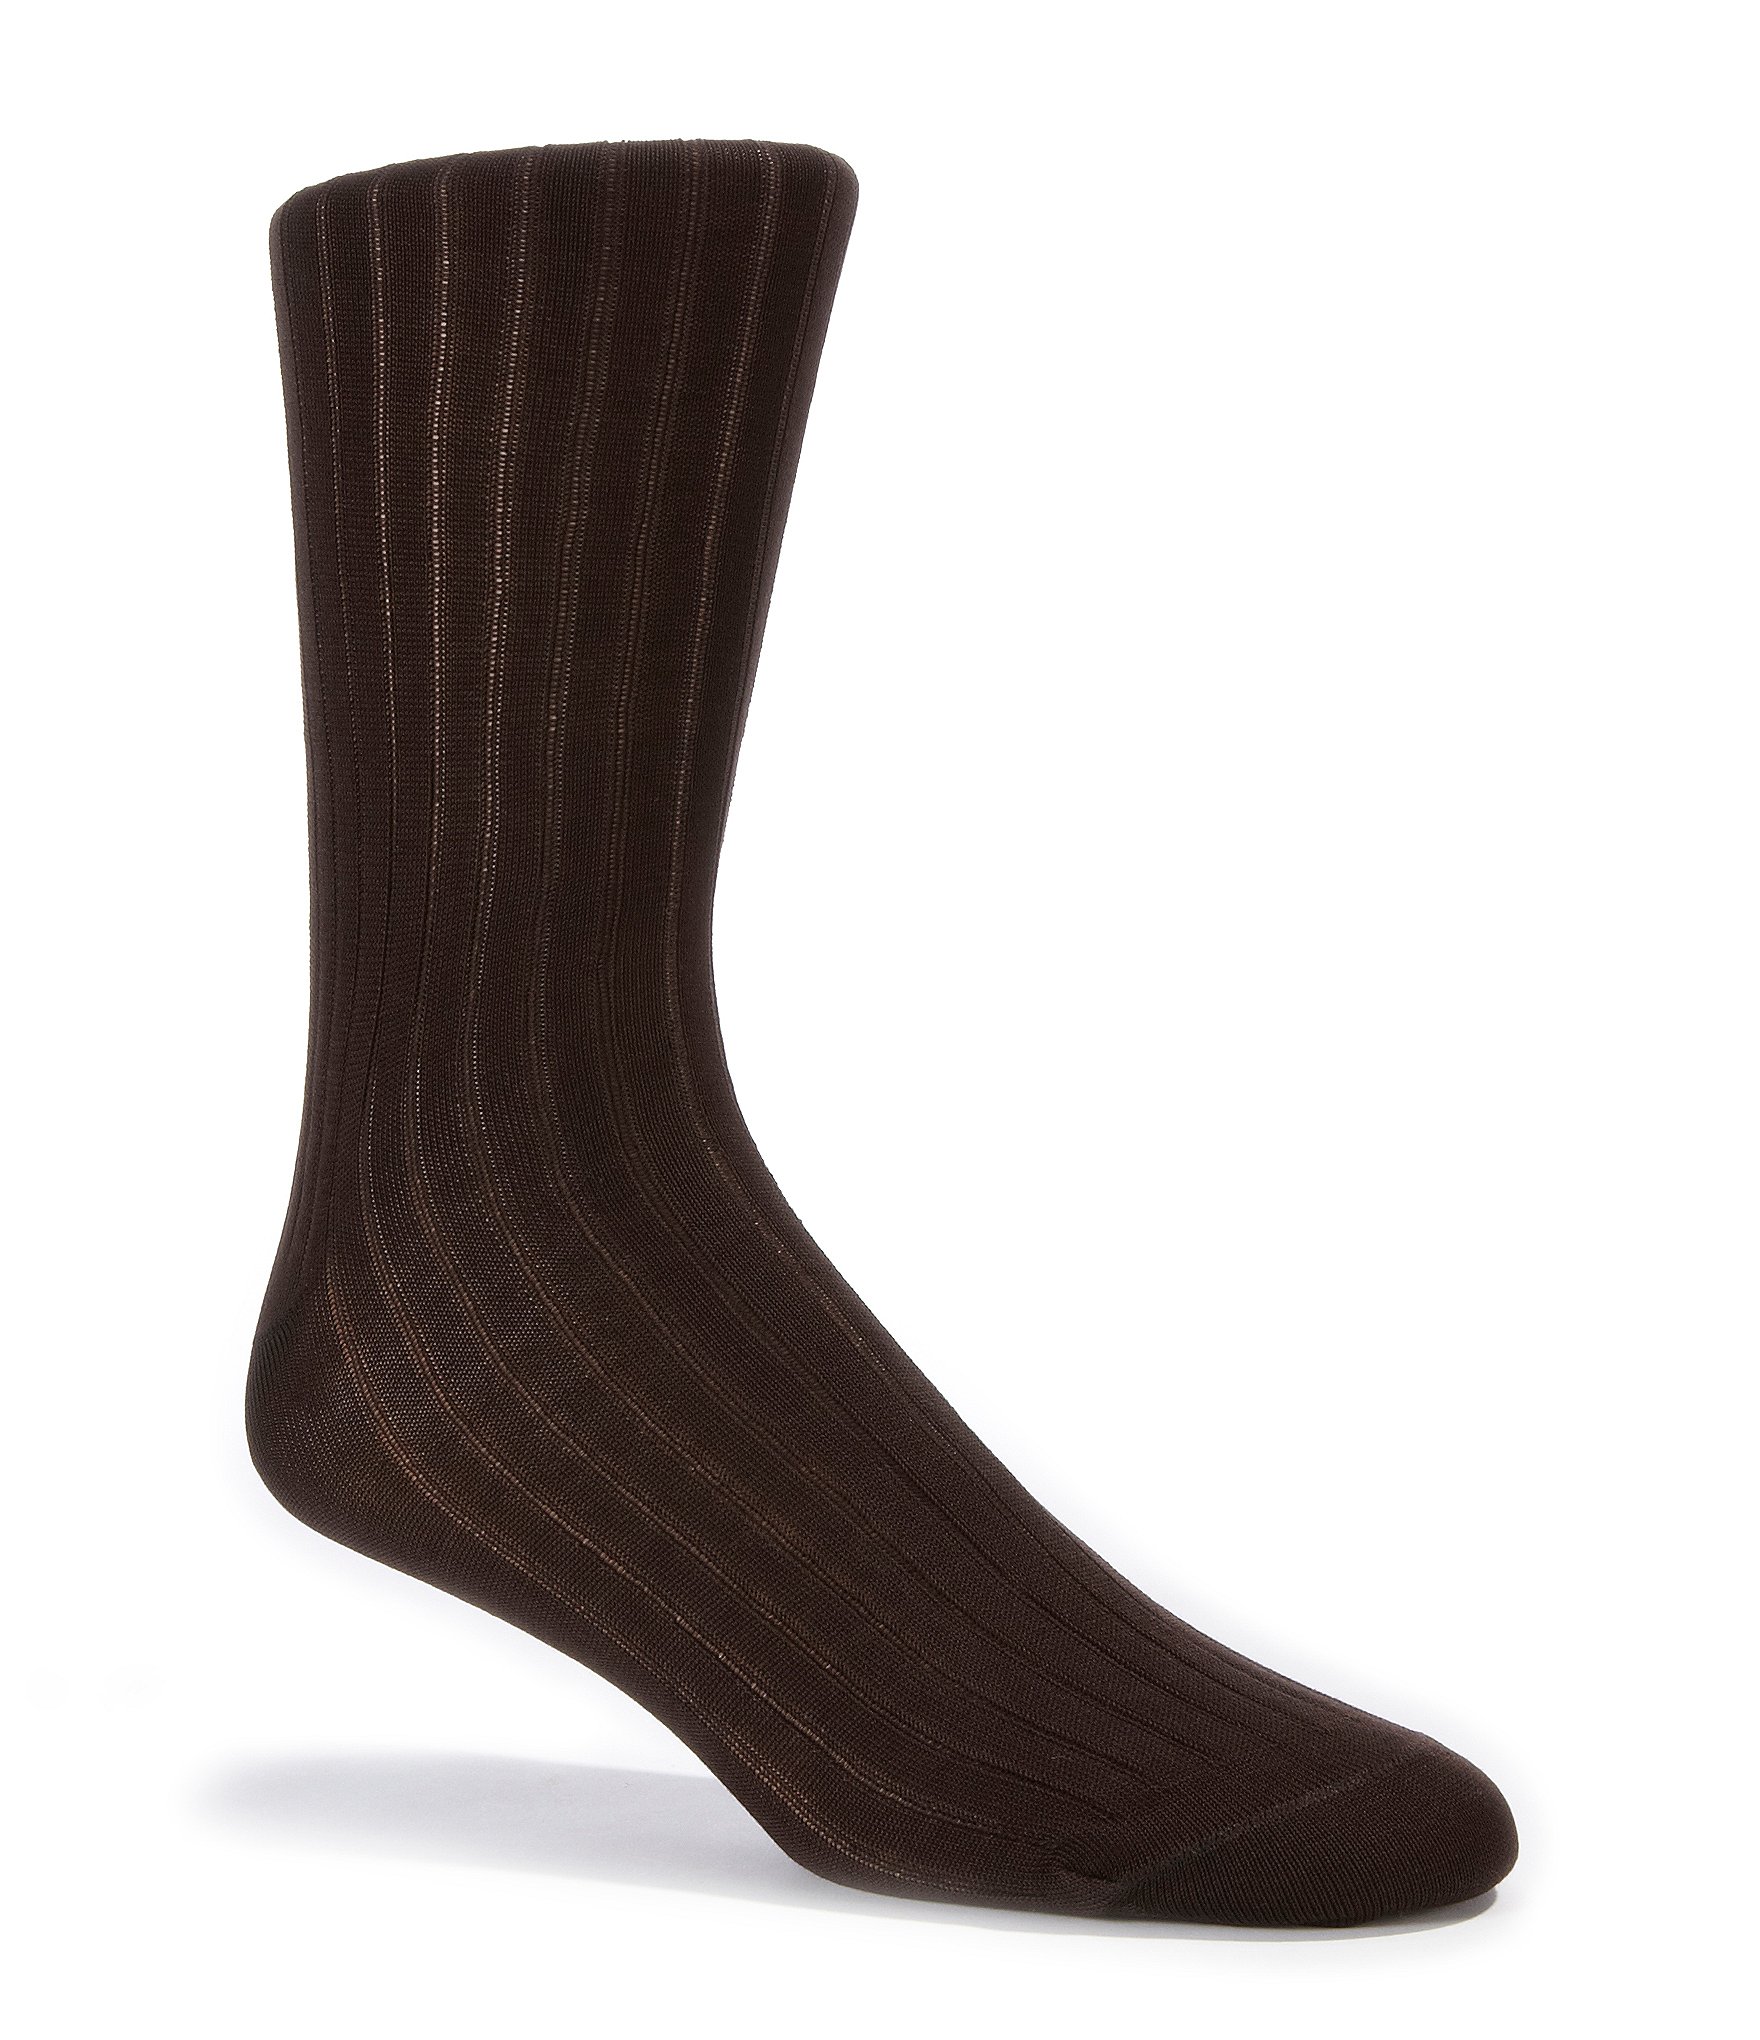 brown dress socks